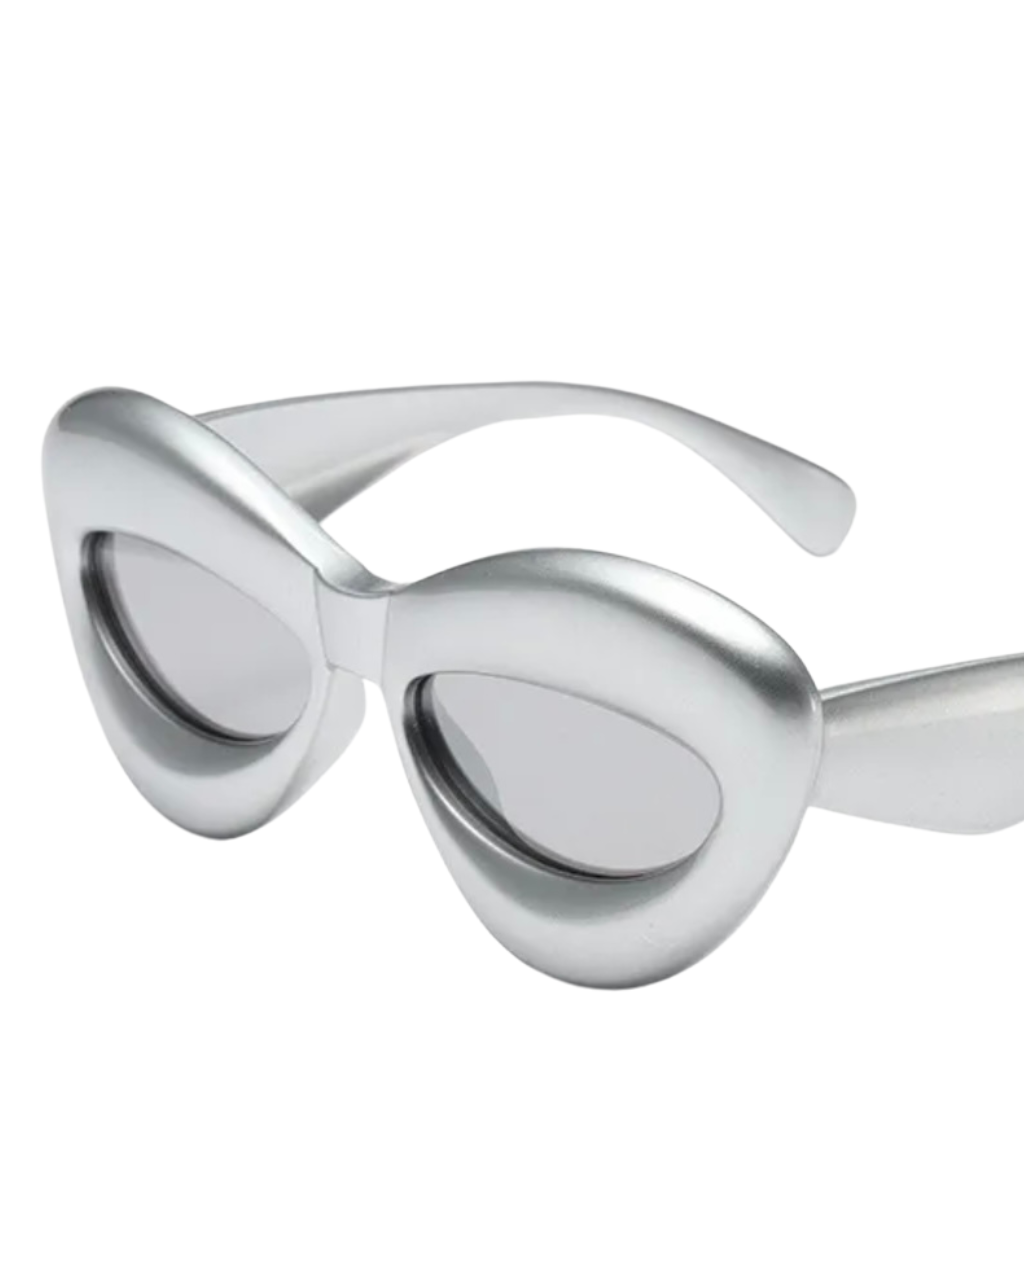 'True' Oval Sunglasses (Metallic Silver)